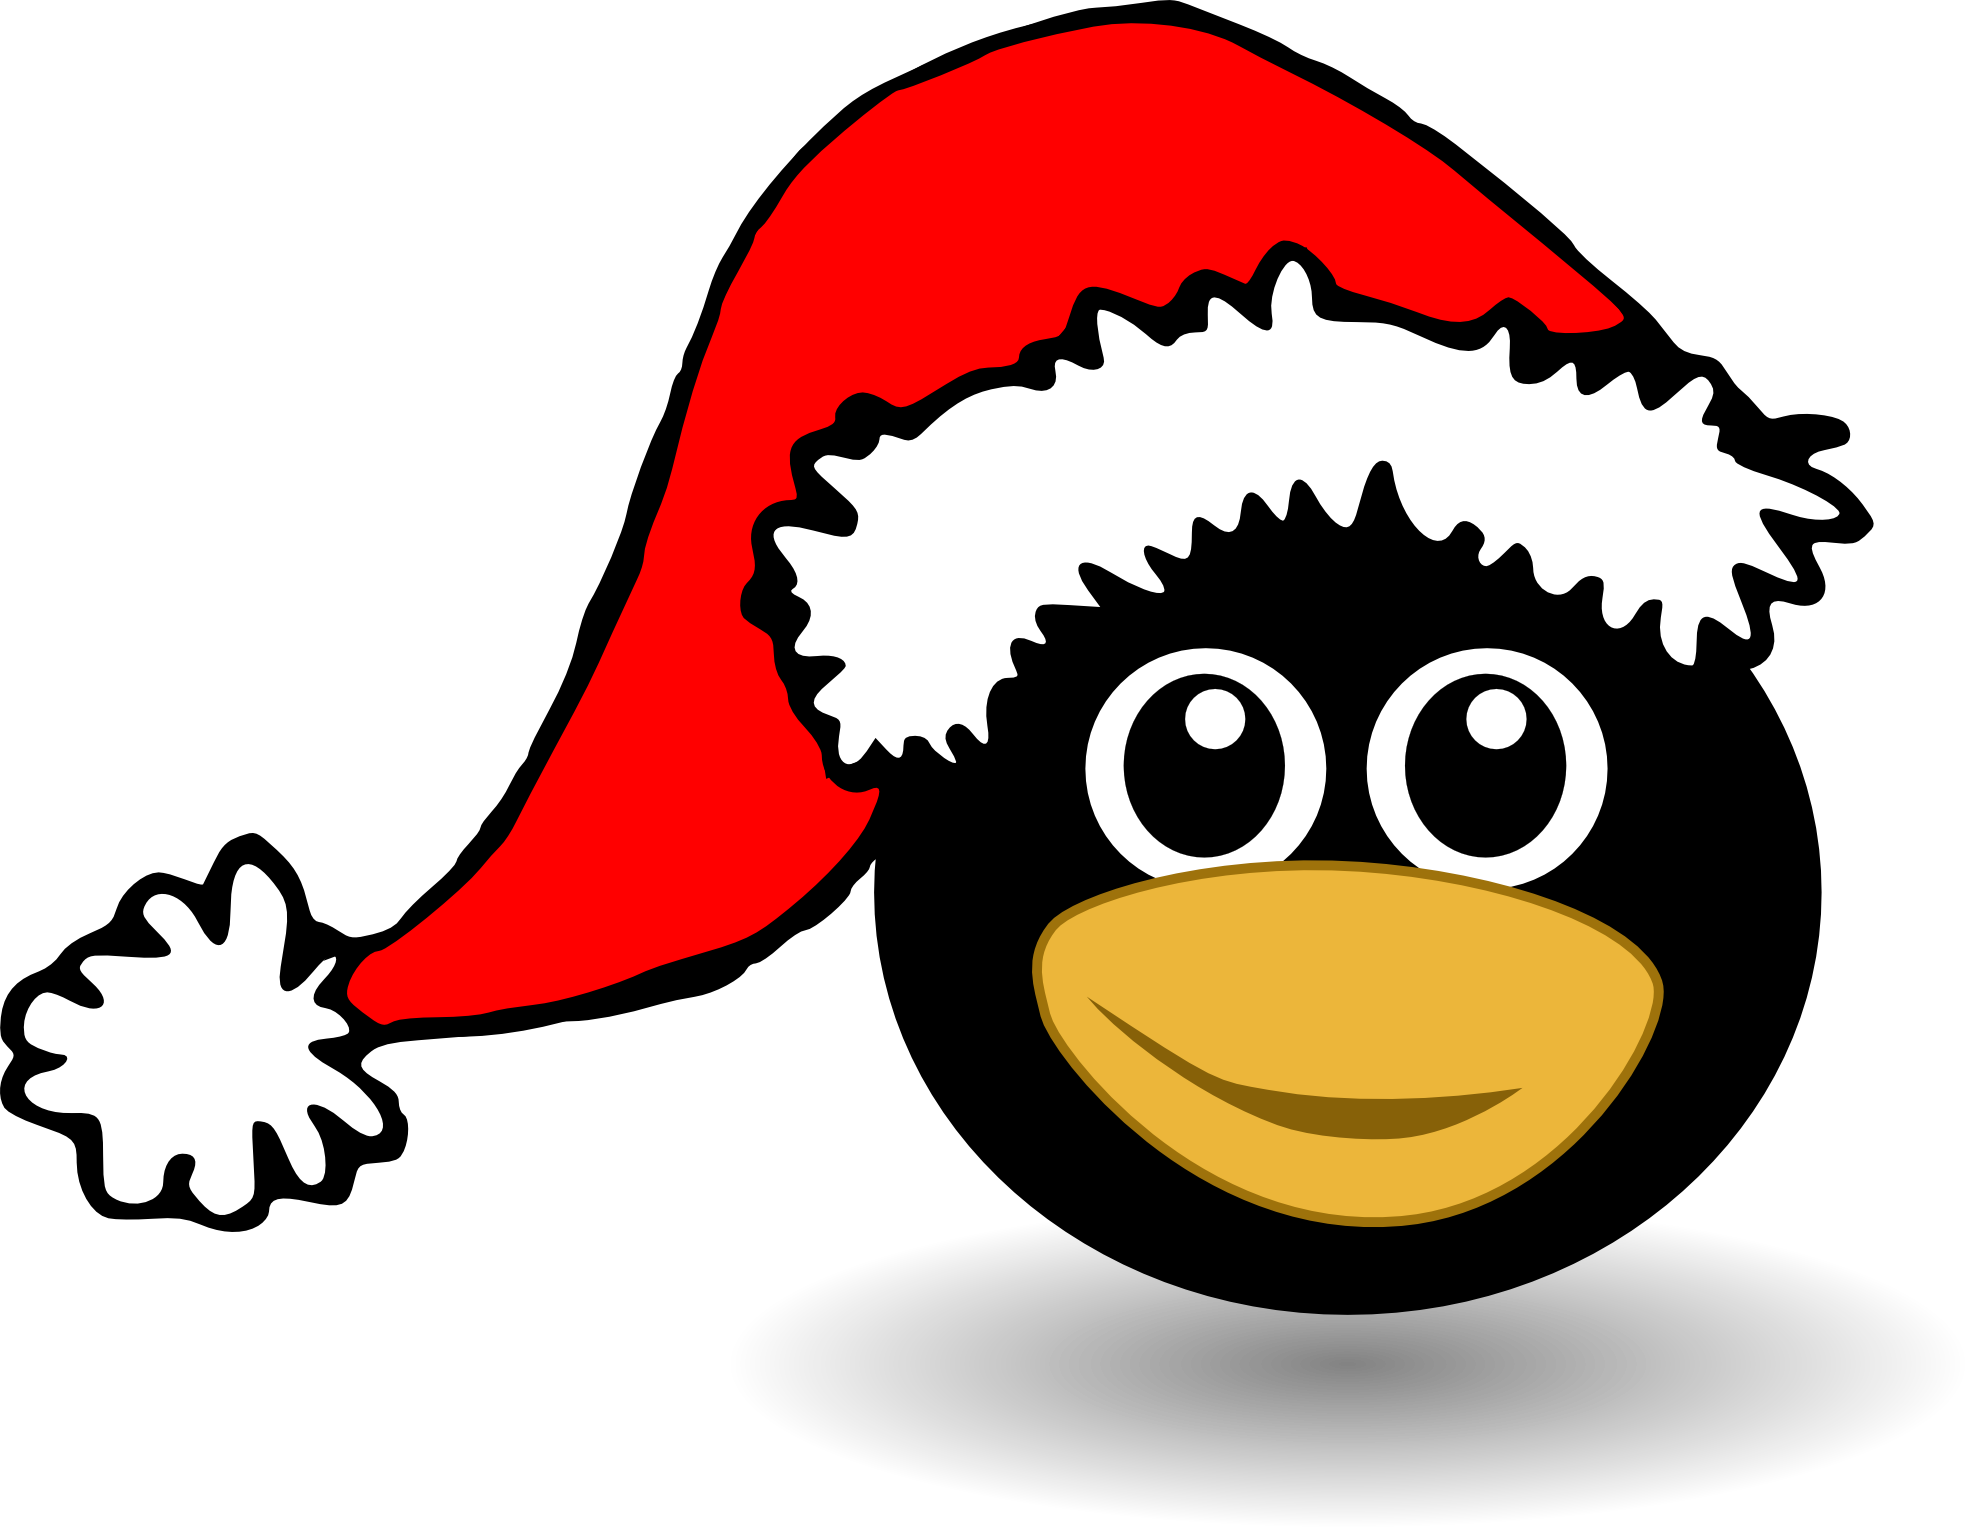 palomaironique Penguin 1 Head Cartoon with Santa ...